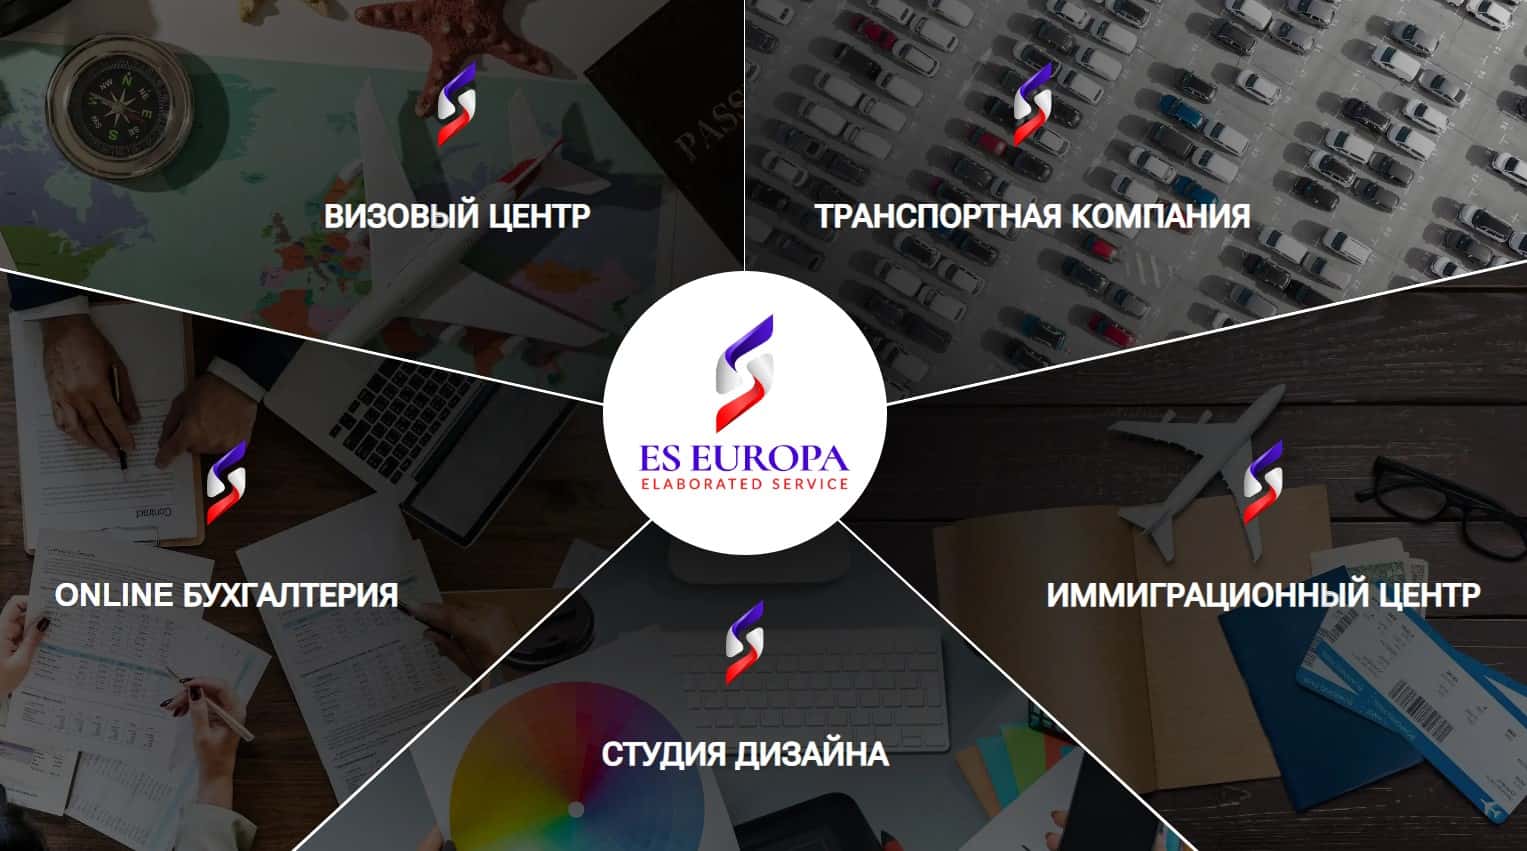 Сайт компании ES EUROPA